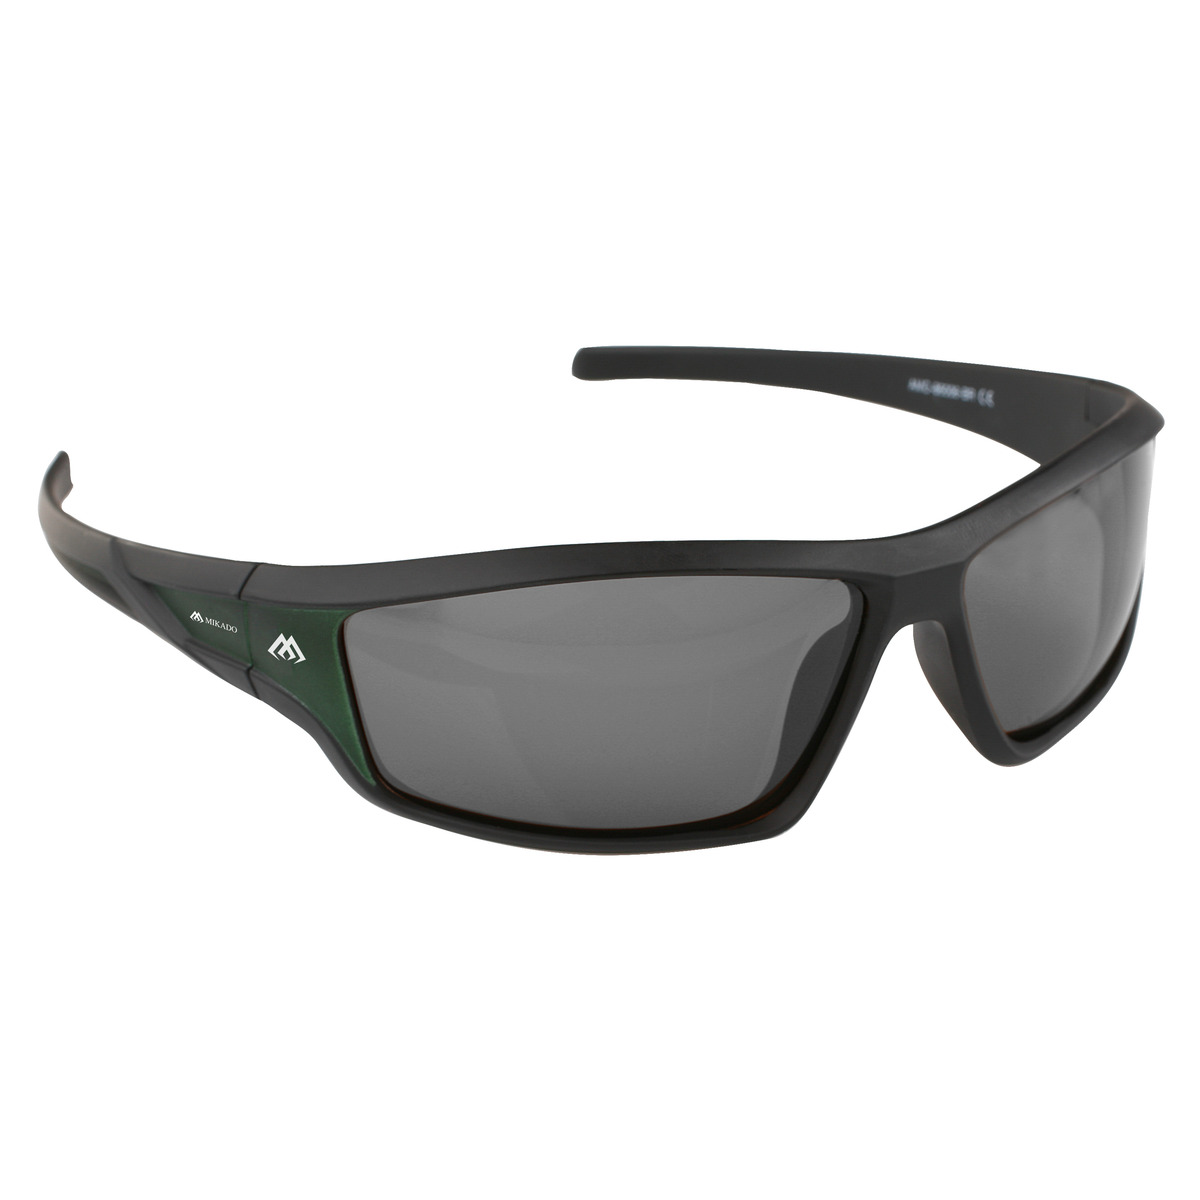 Mikado Sunglasses Polarized - 86006 GREY